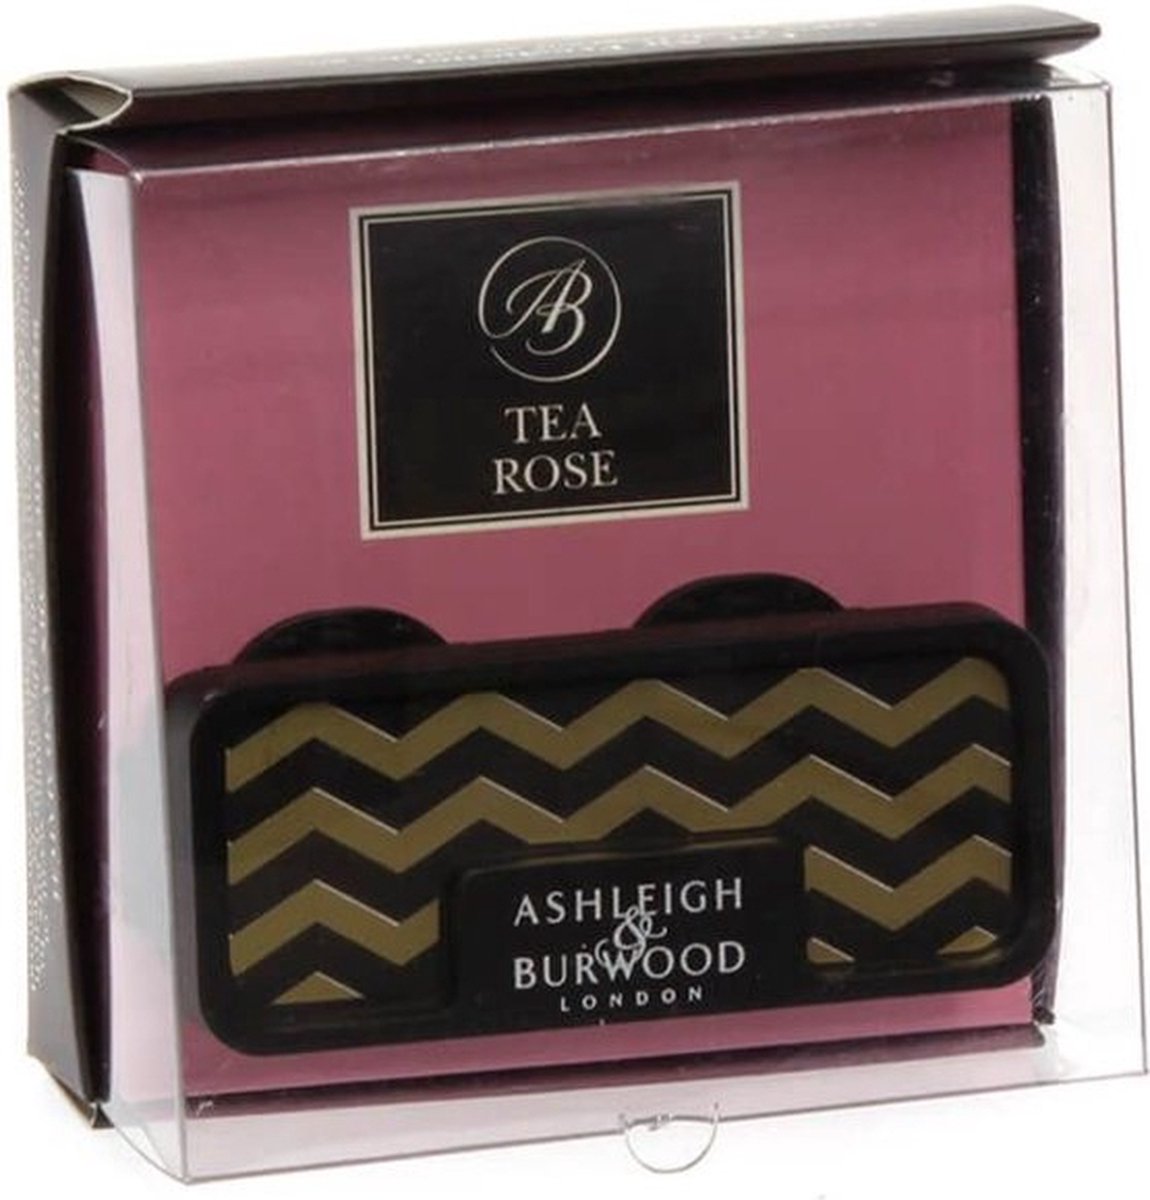 Luxe Autoparfum | Car Freshener Tea Rose - roos lelie hyacint geranium - met Navulling - Ashleigh & Burwood